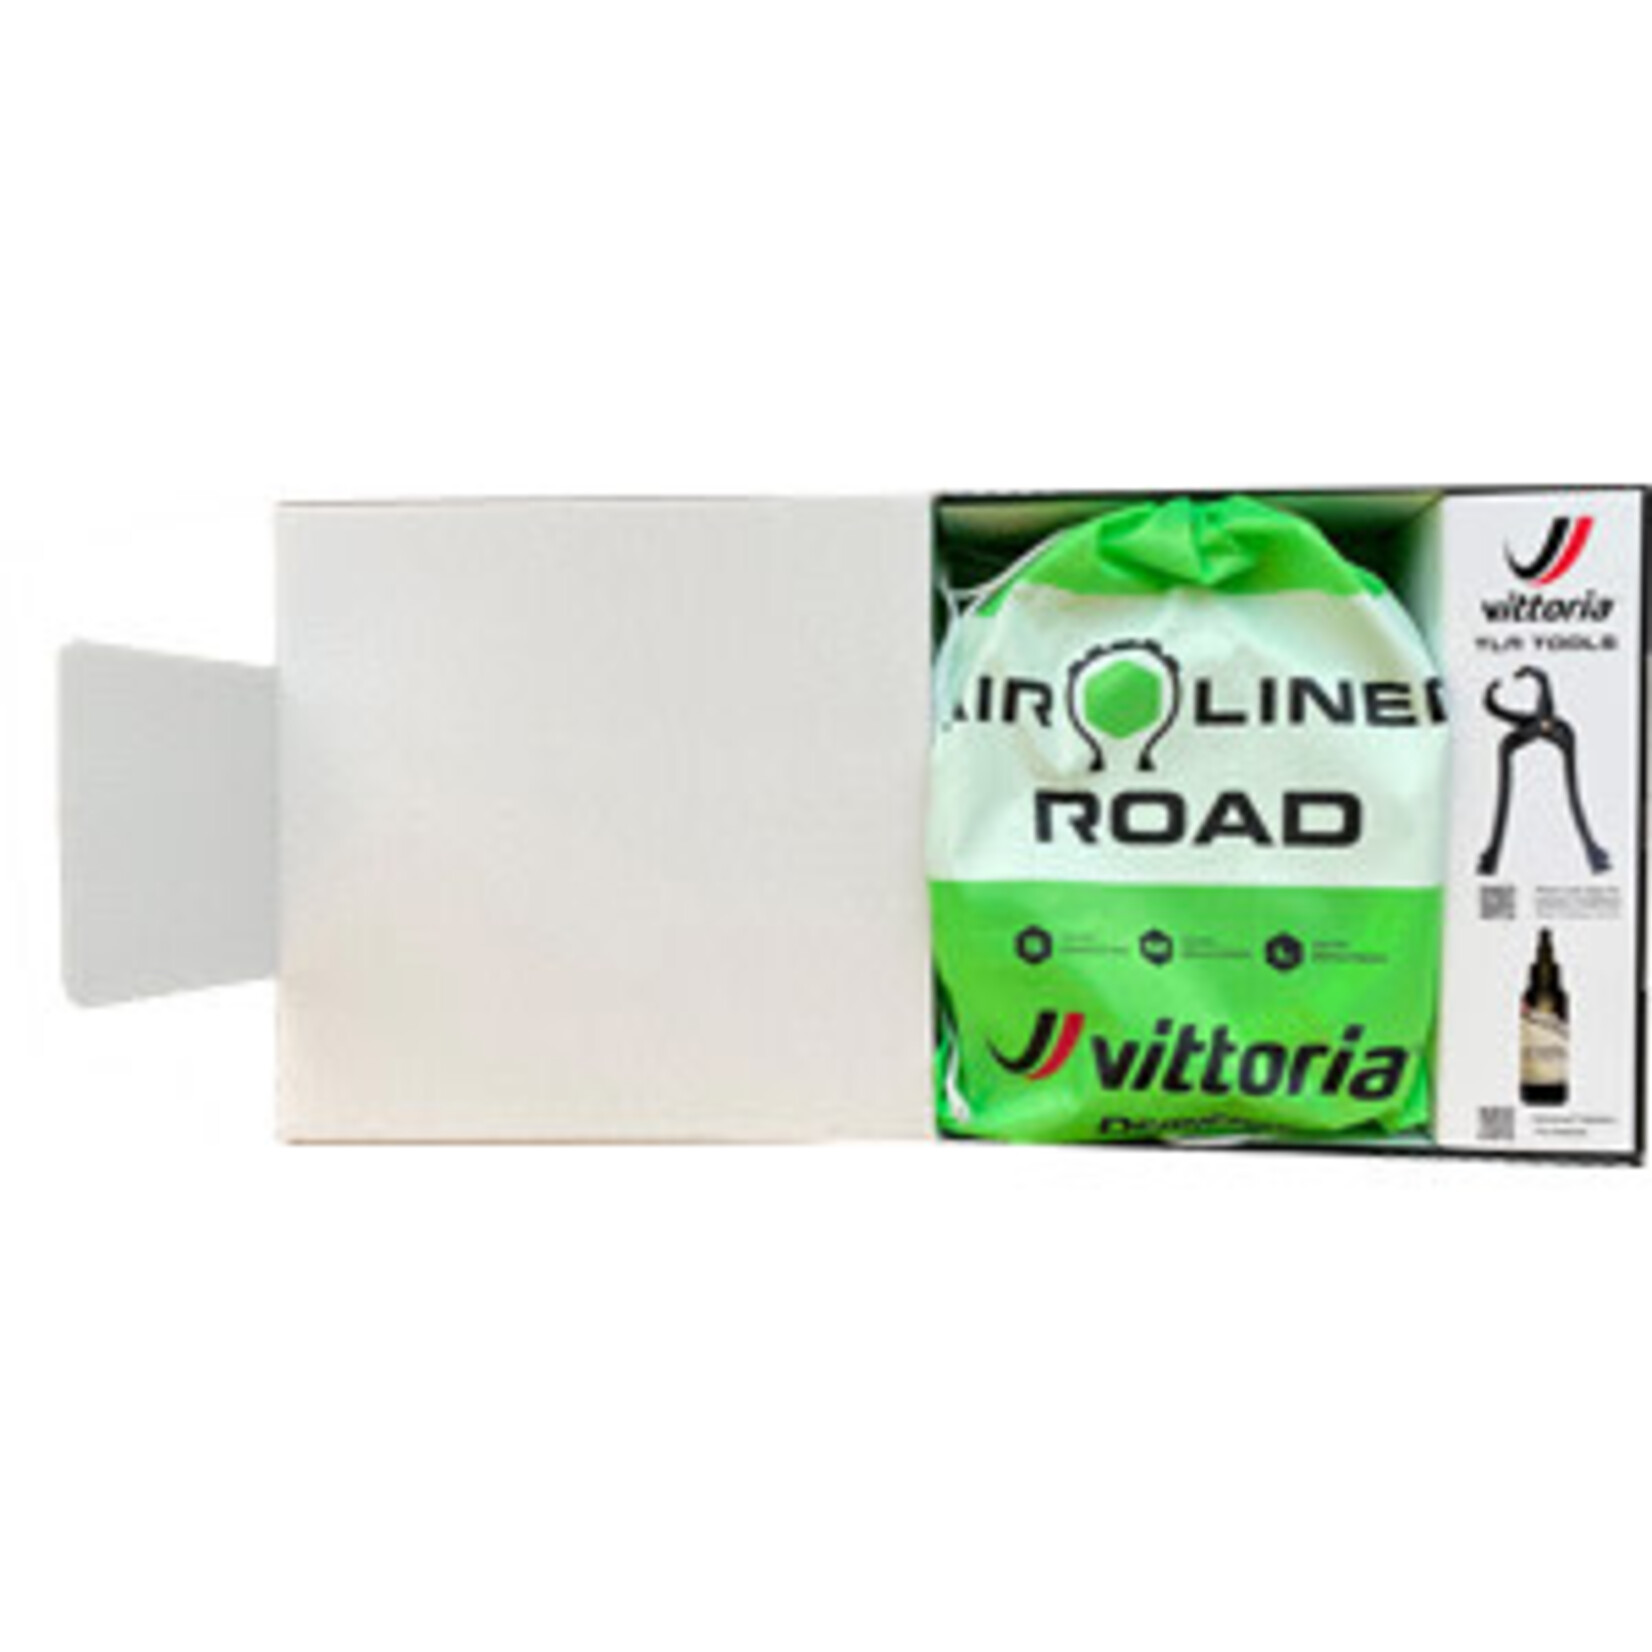 VITTORIA Vittoria Air Tyre Tubeless Road Kit Large for 30mm